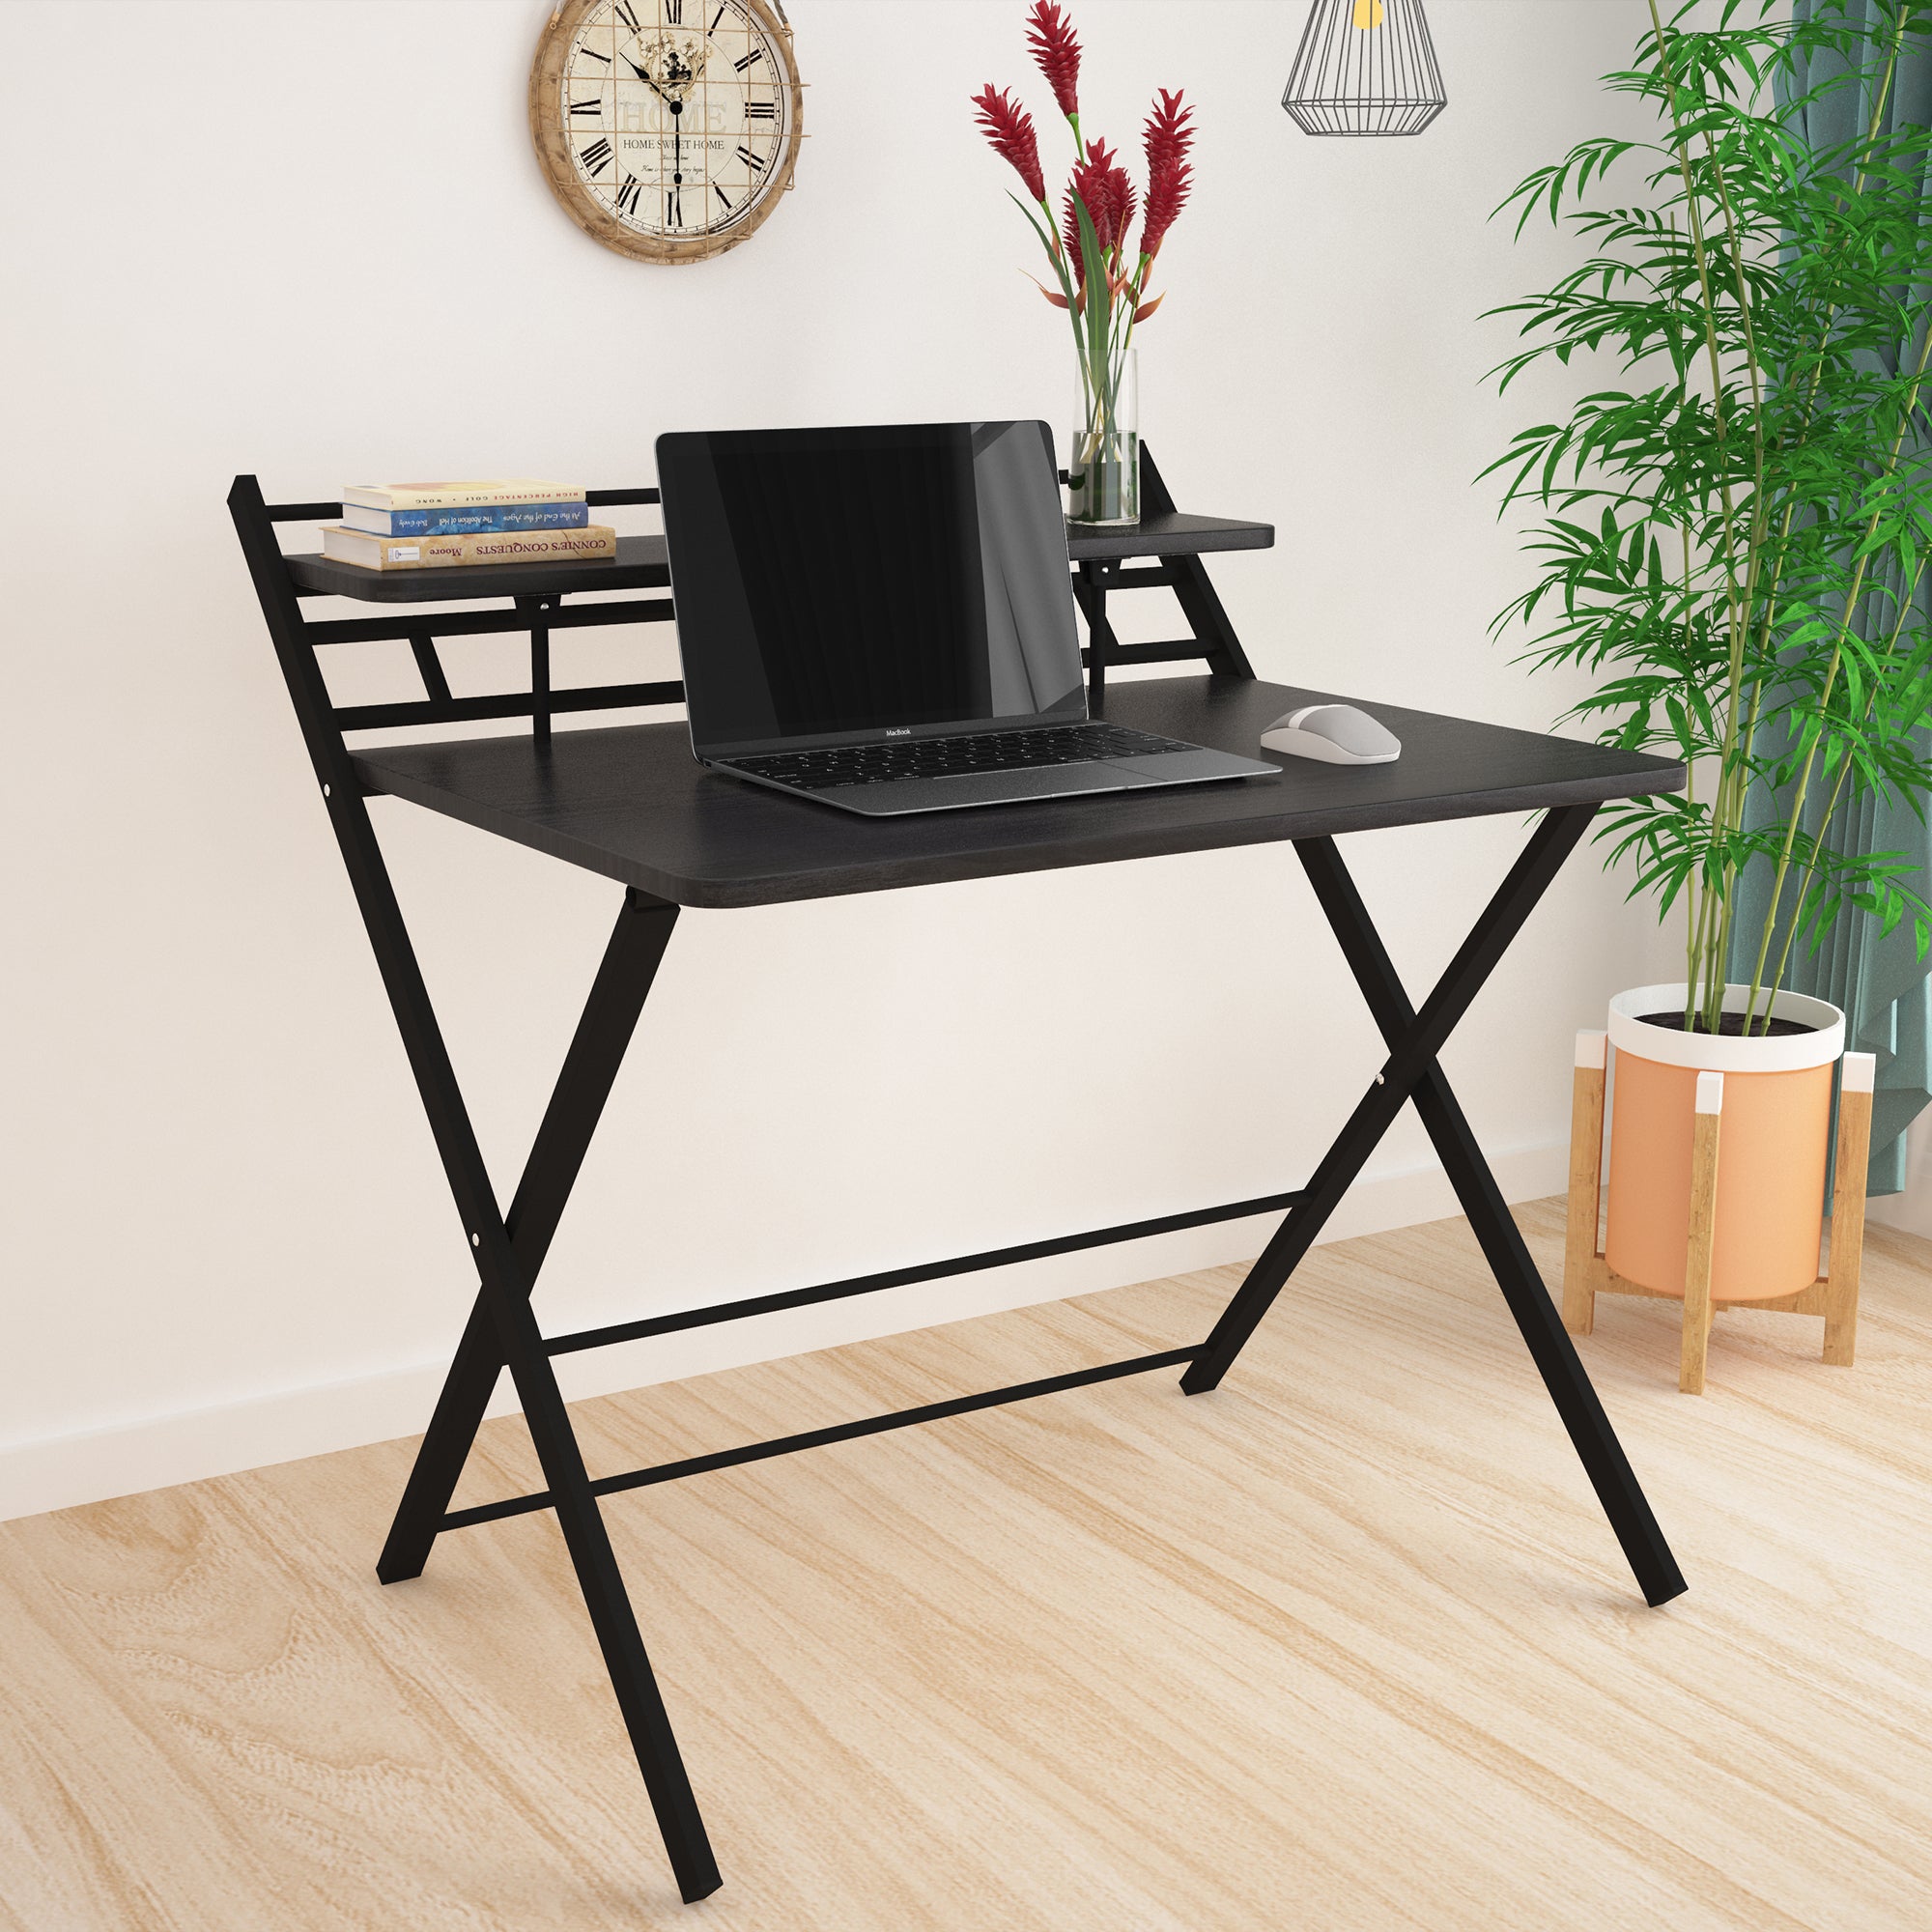 Multipurpose Black Foldable Table